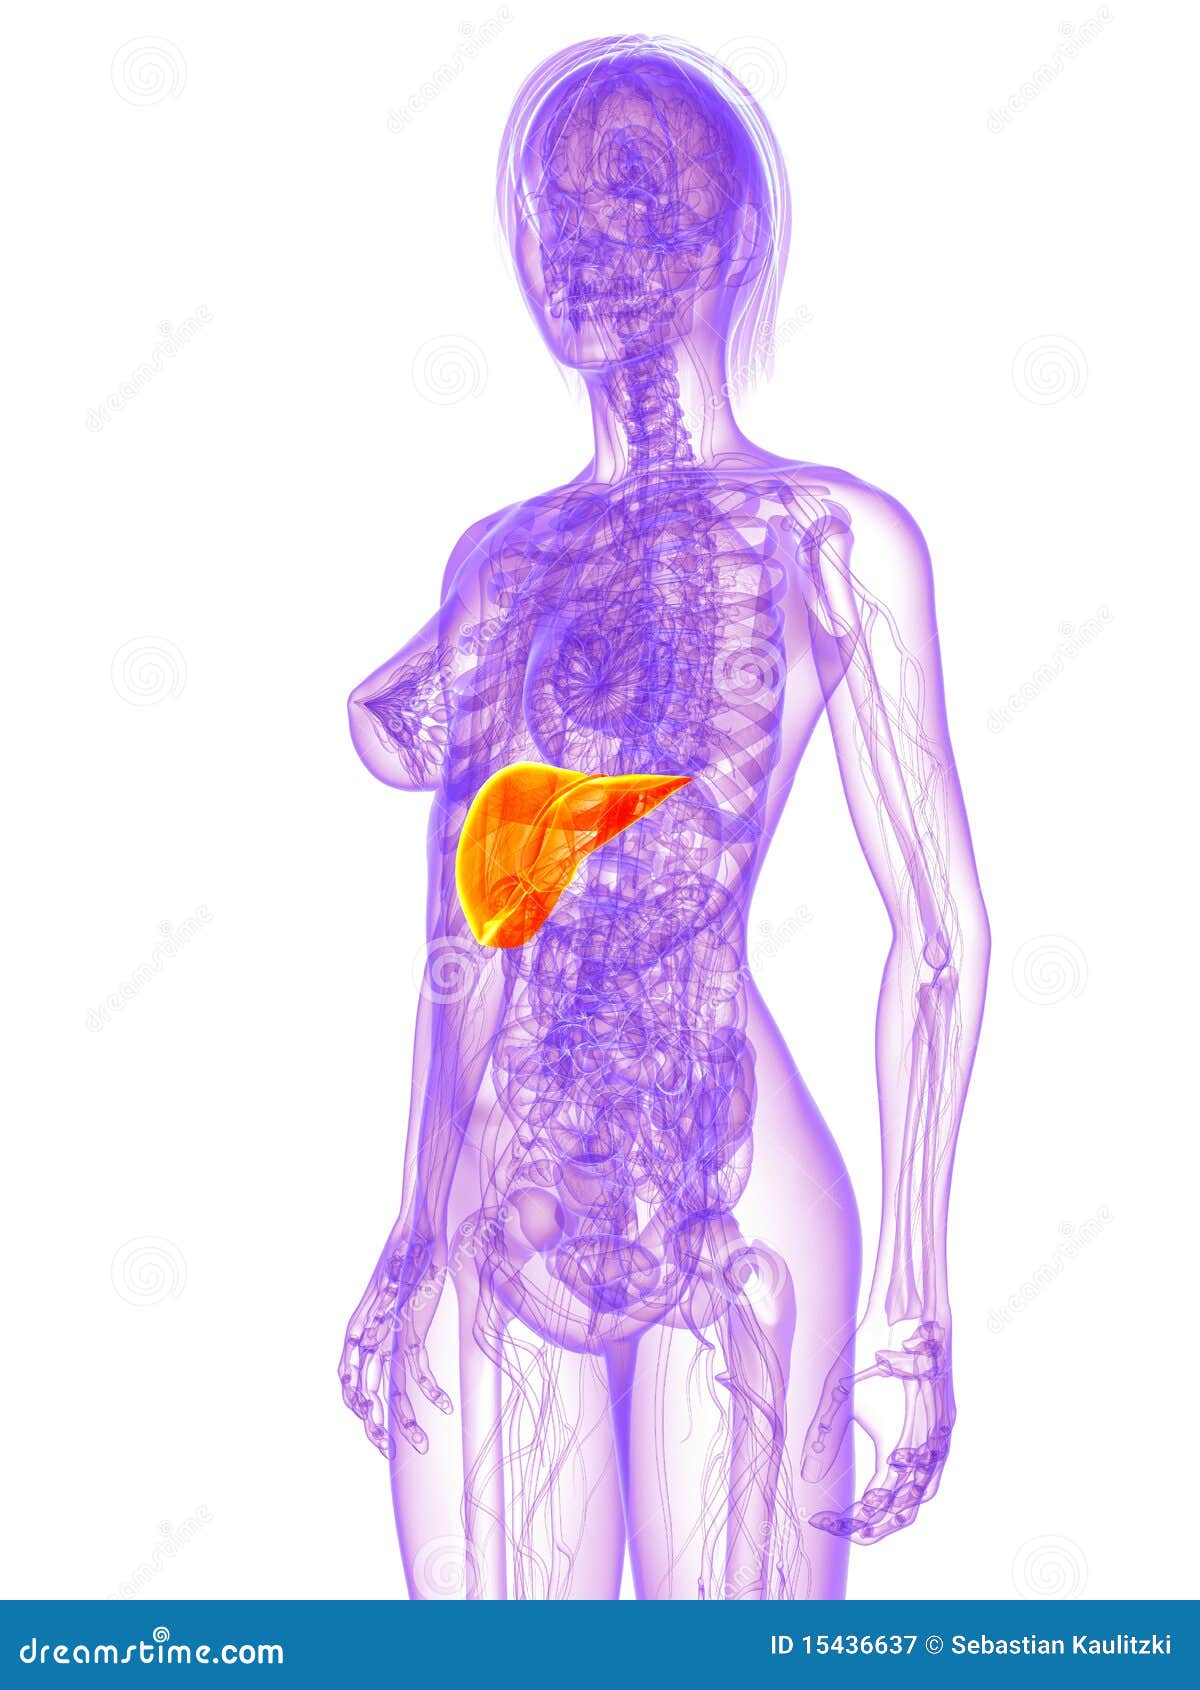 female anatomy - liver